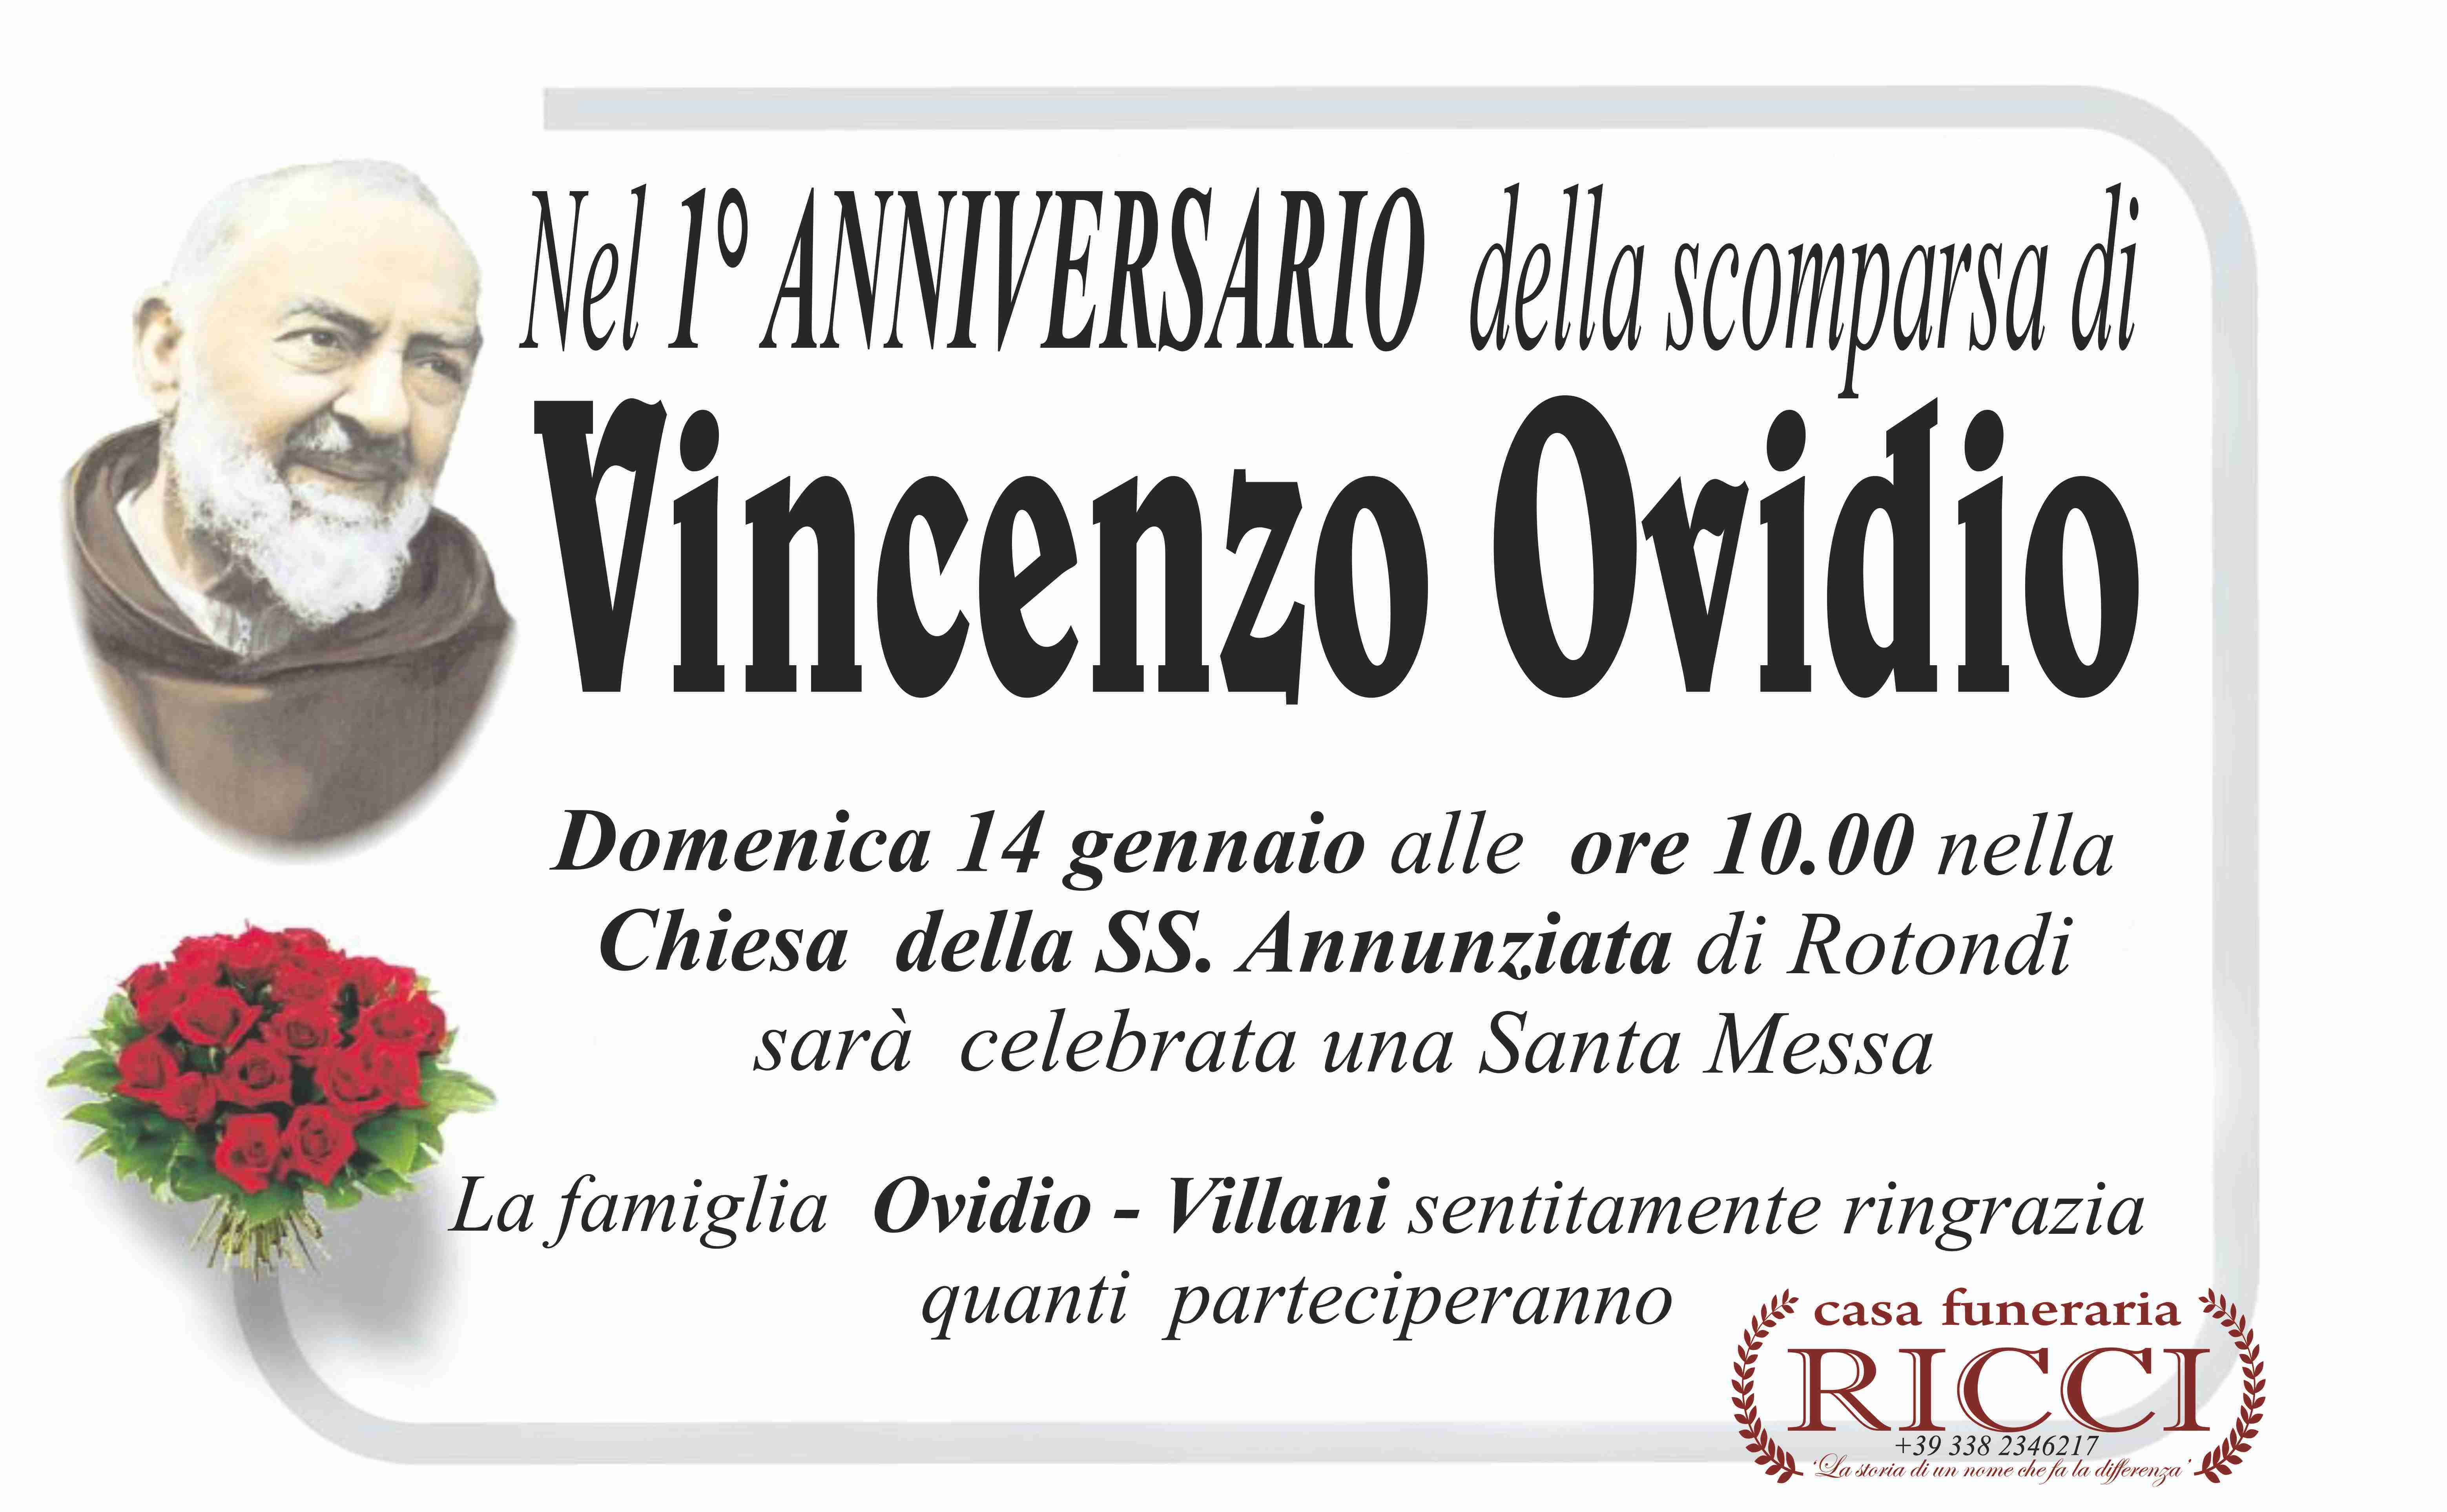 Vincenzo Ovidio